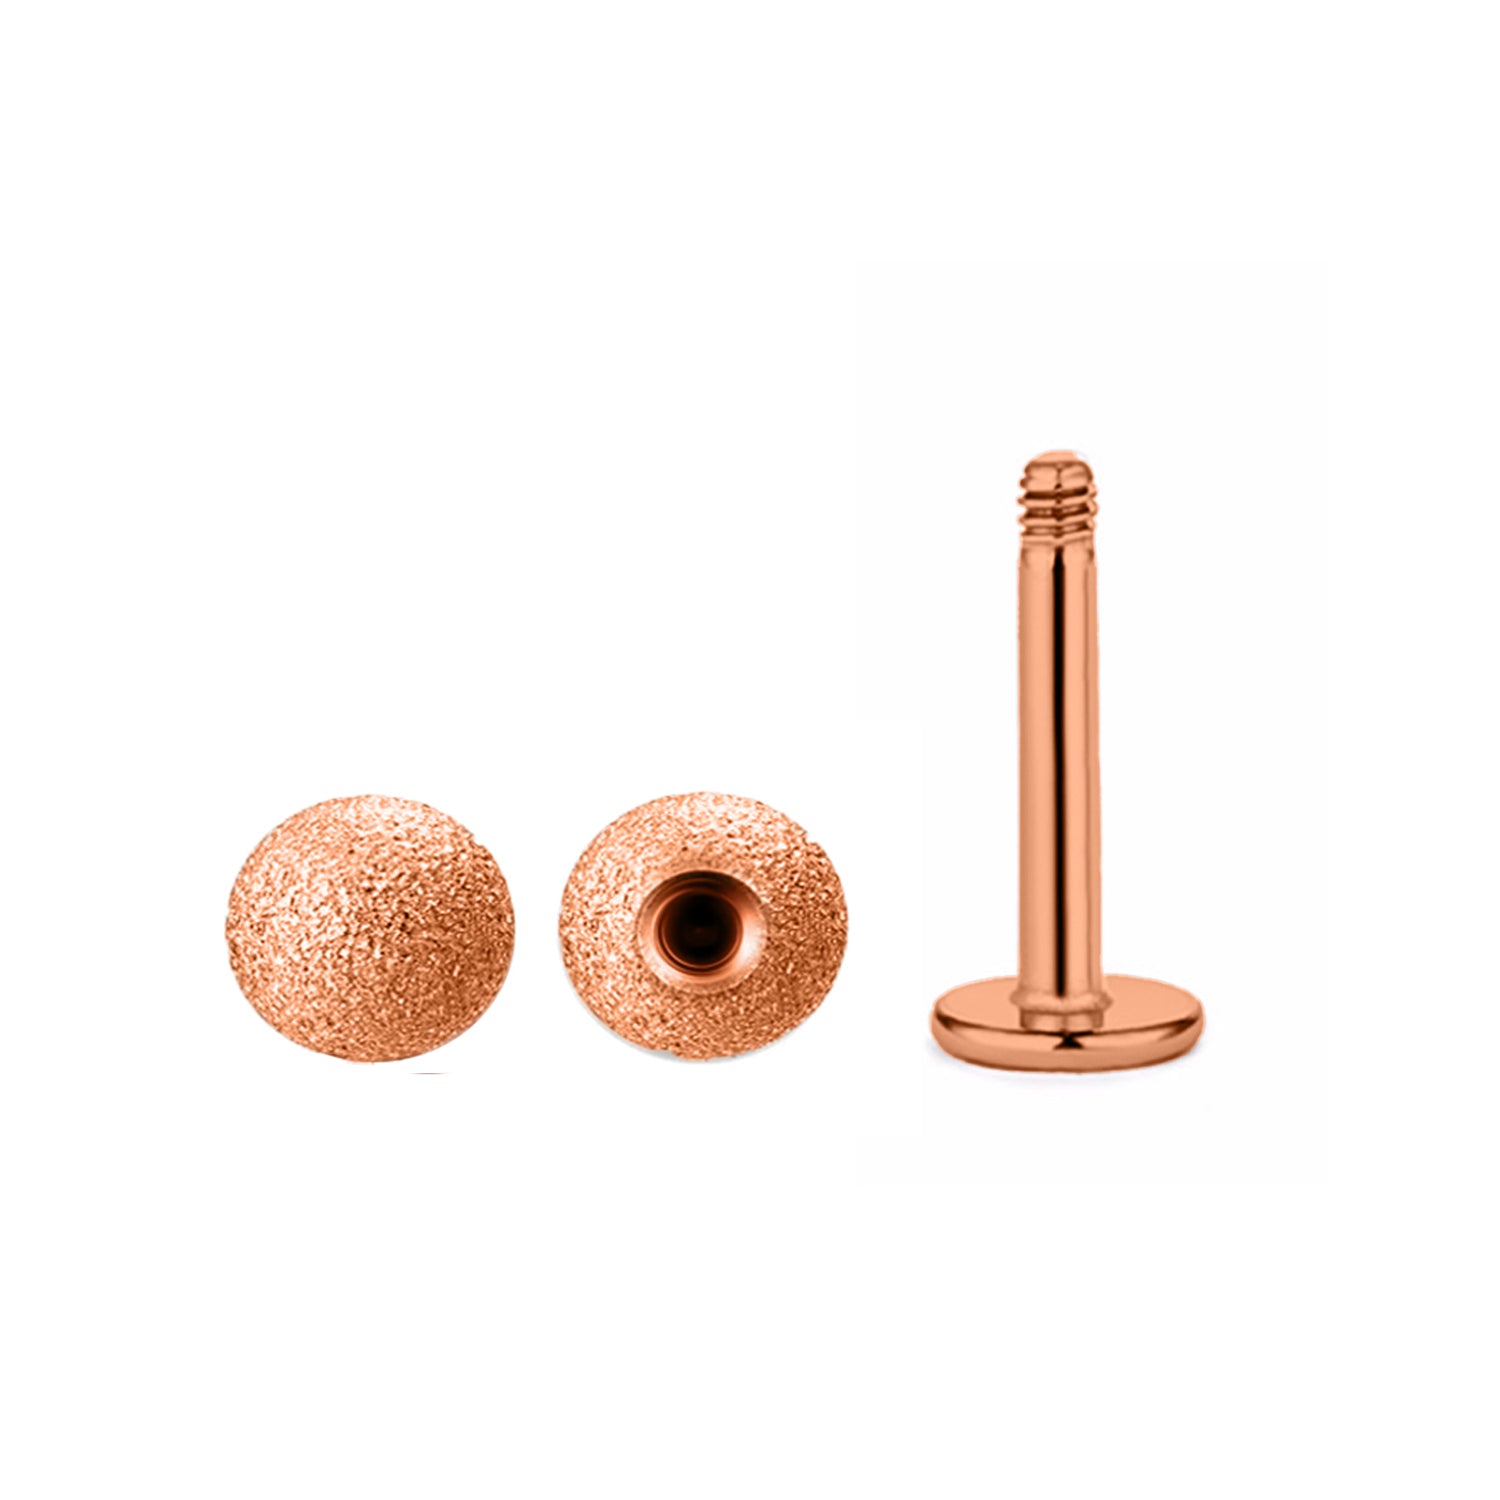 18K Rose Gold Steel Labret mit Kugel -Sandgestrahlt im Diamant Schliff-Design- Stärke 1.6mm